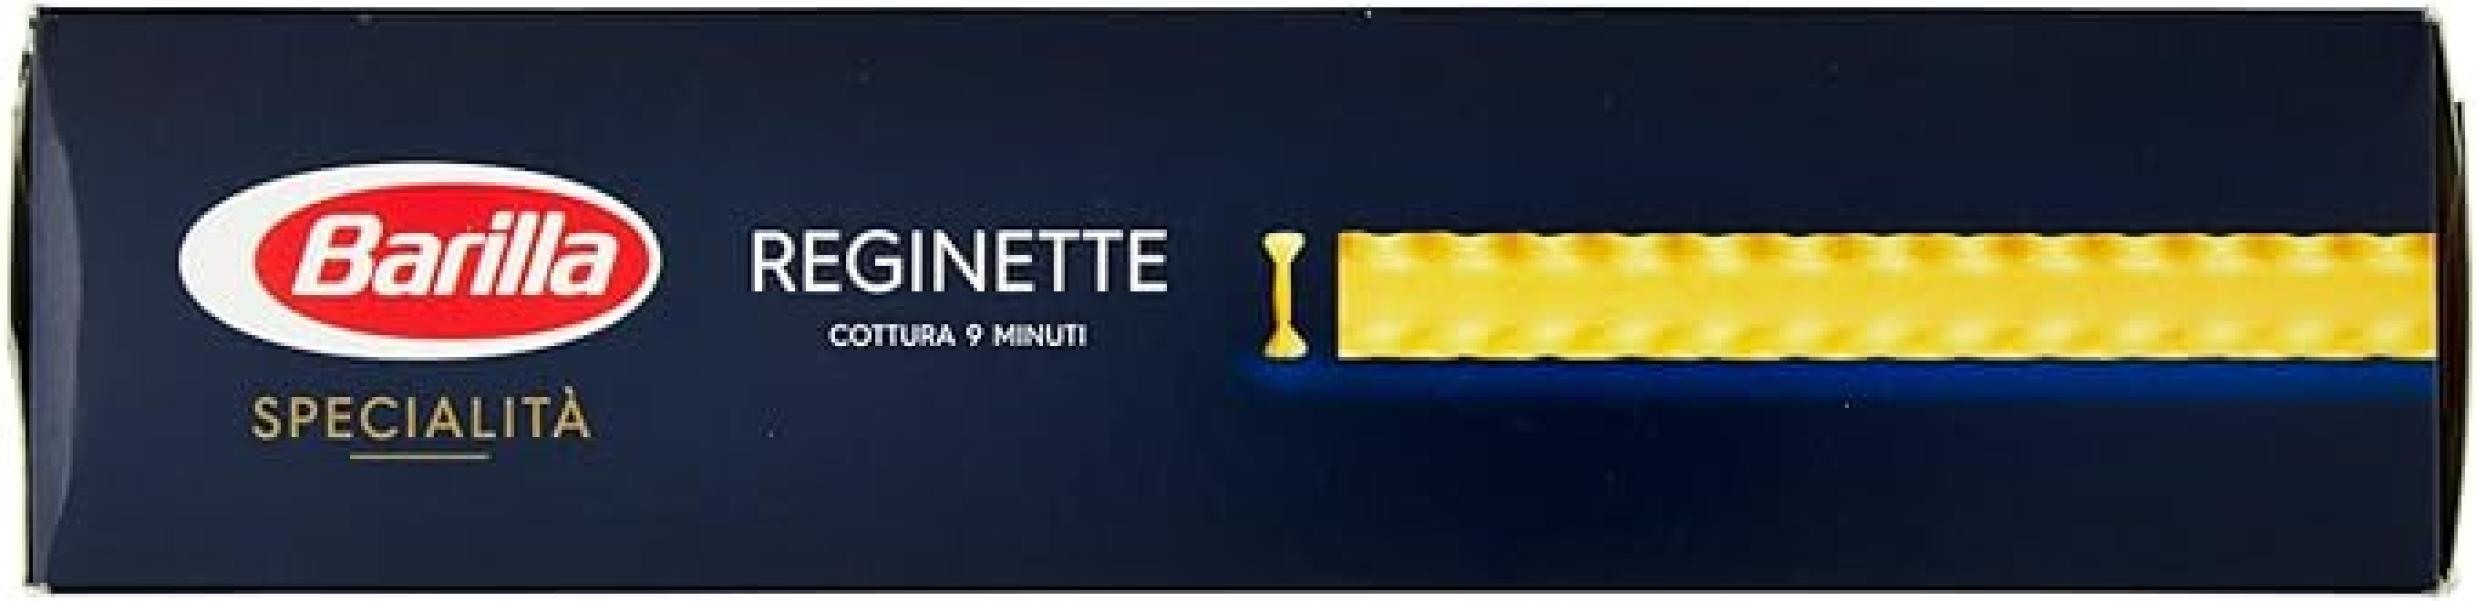 pasta-reginette-napoletane-barilla-500gr-5